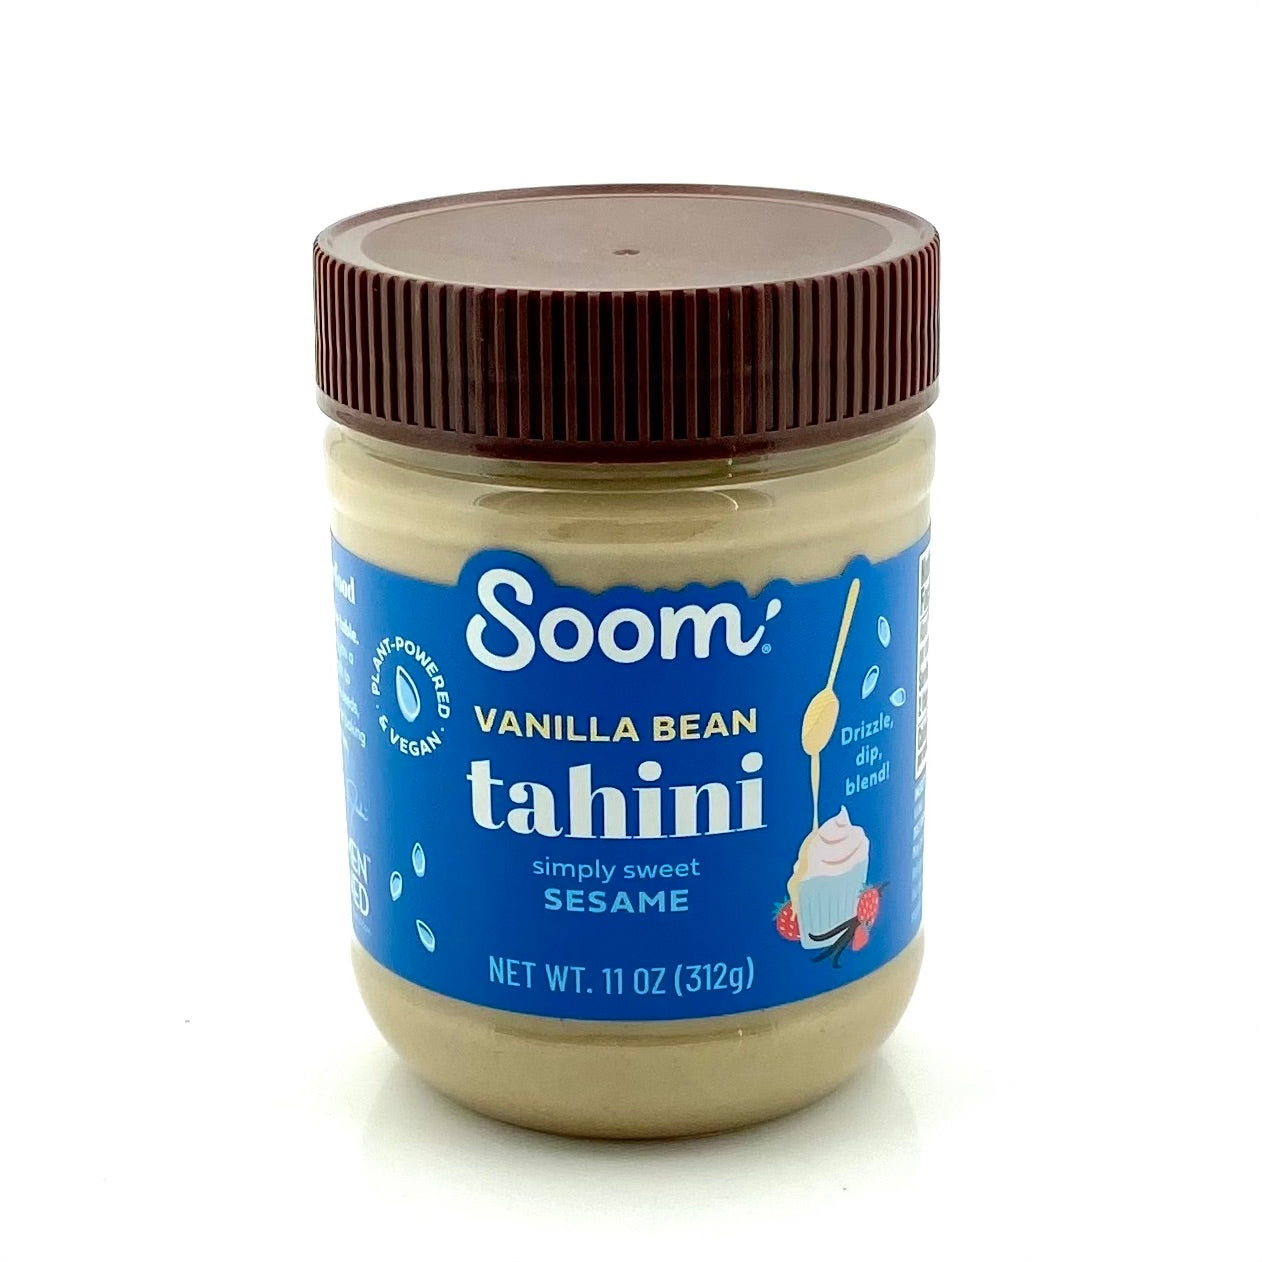 image of vanilla tahina